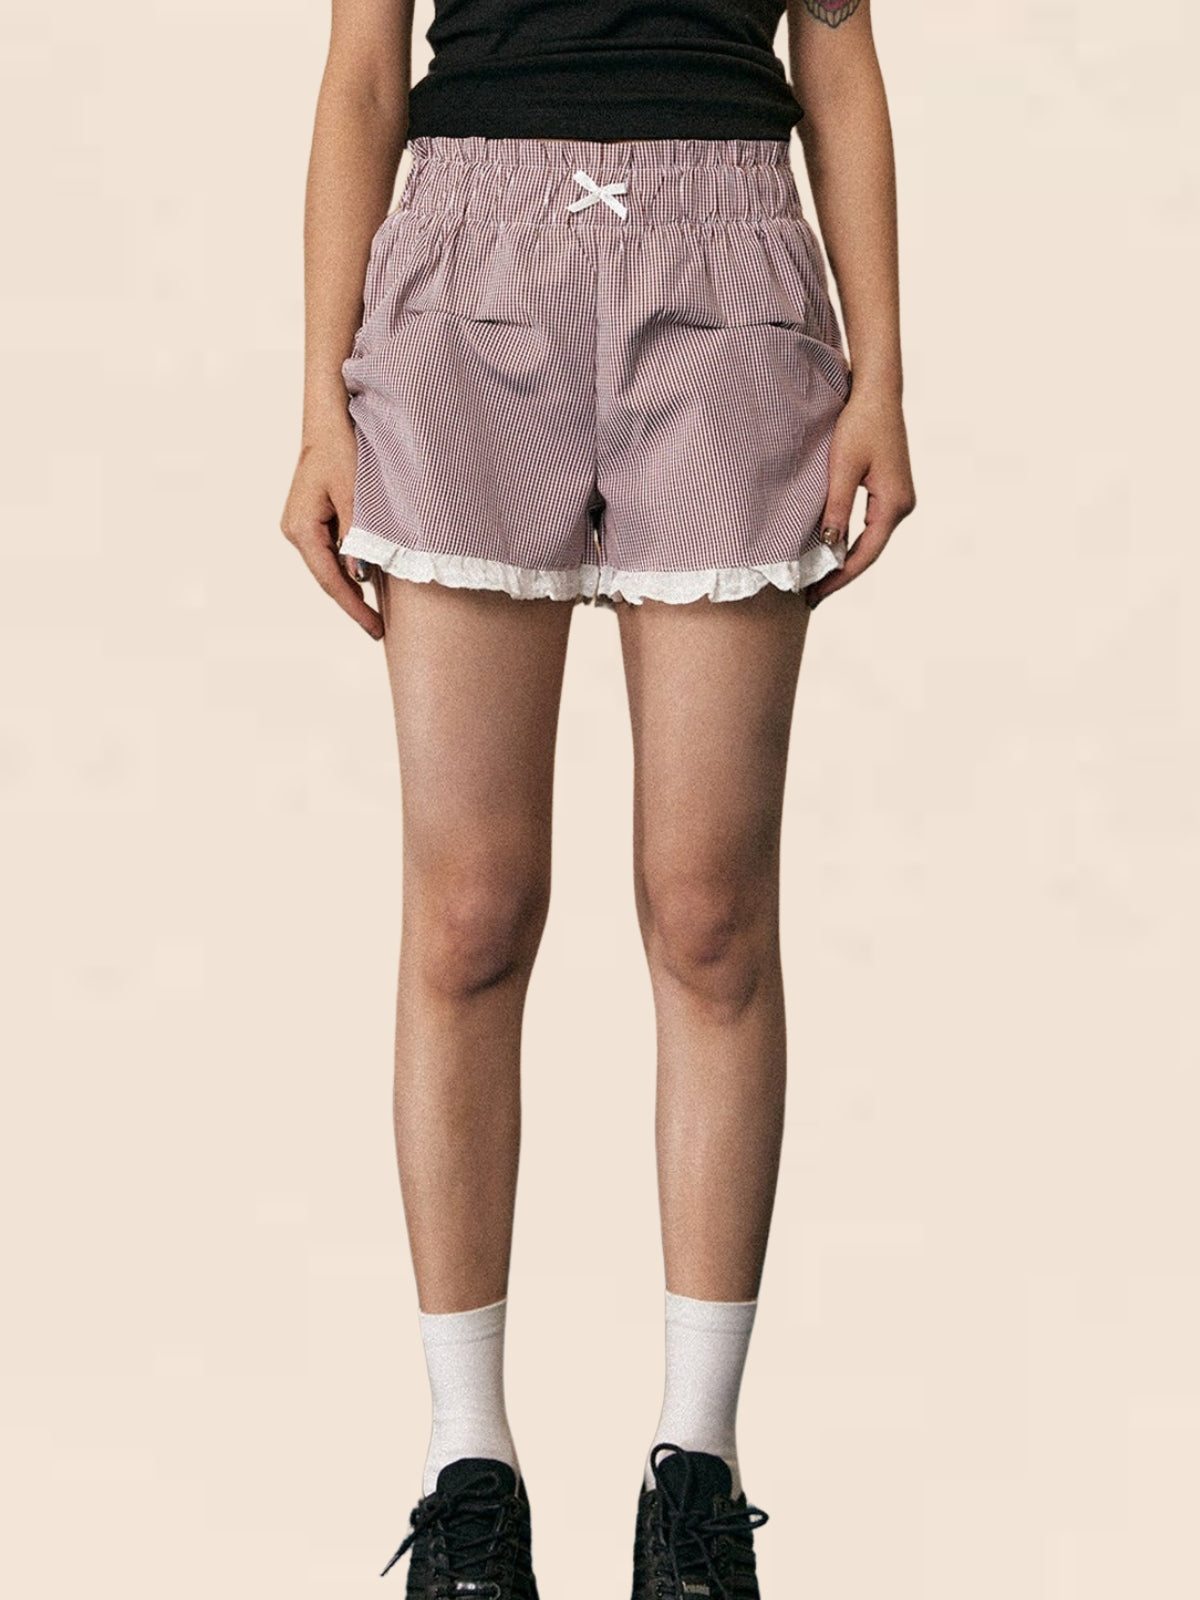 Pink Shorts High Waist Ruffle Pants